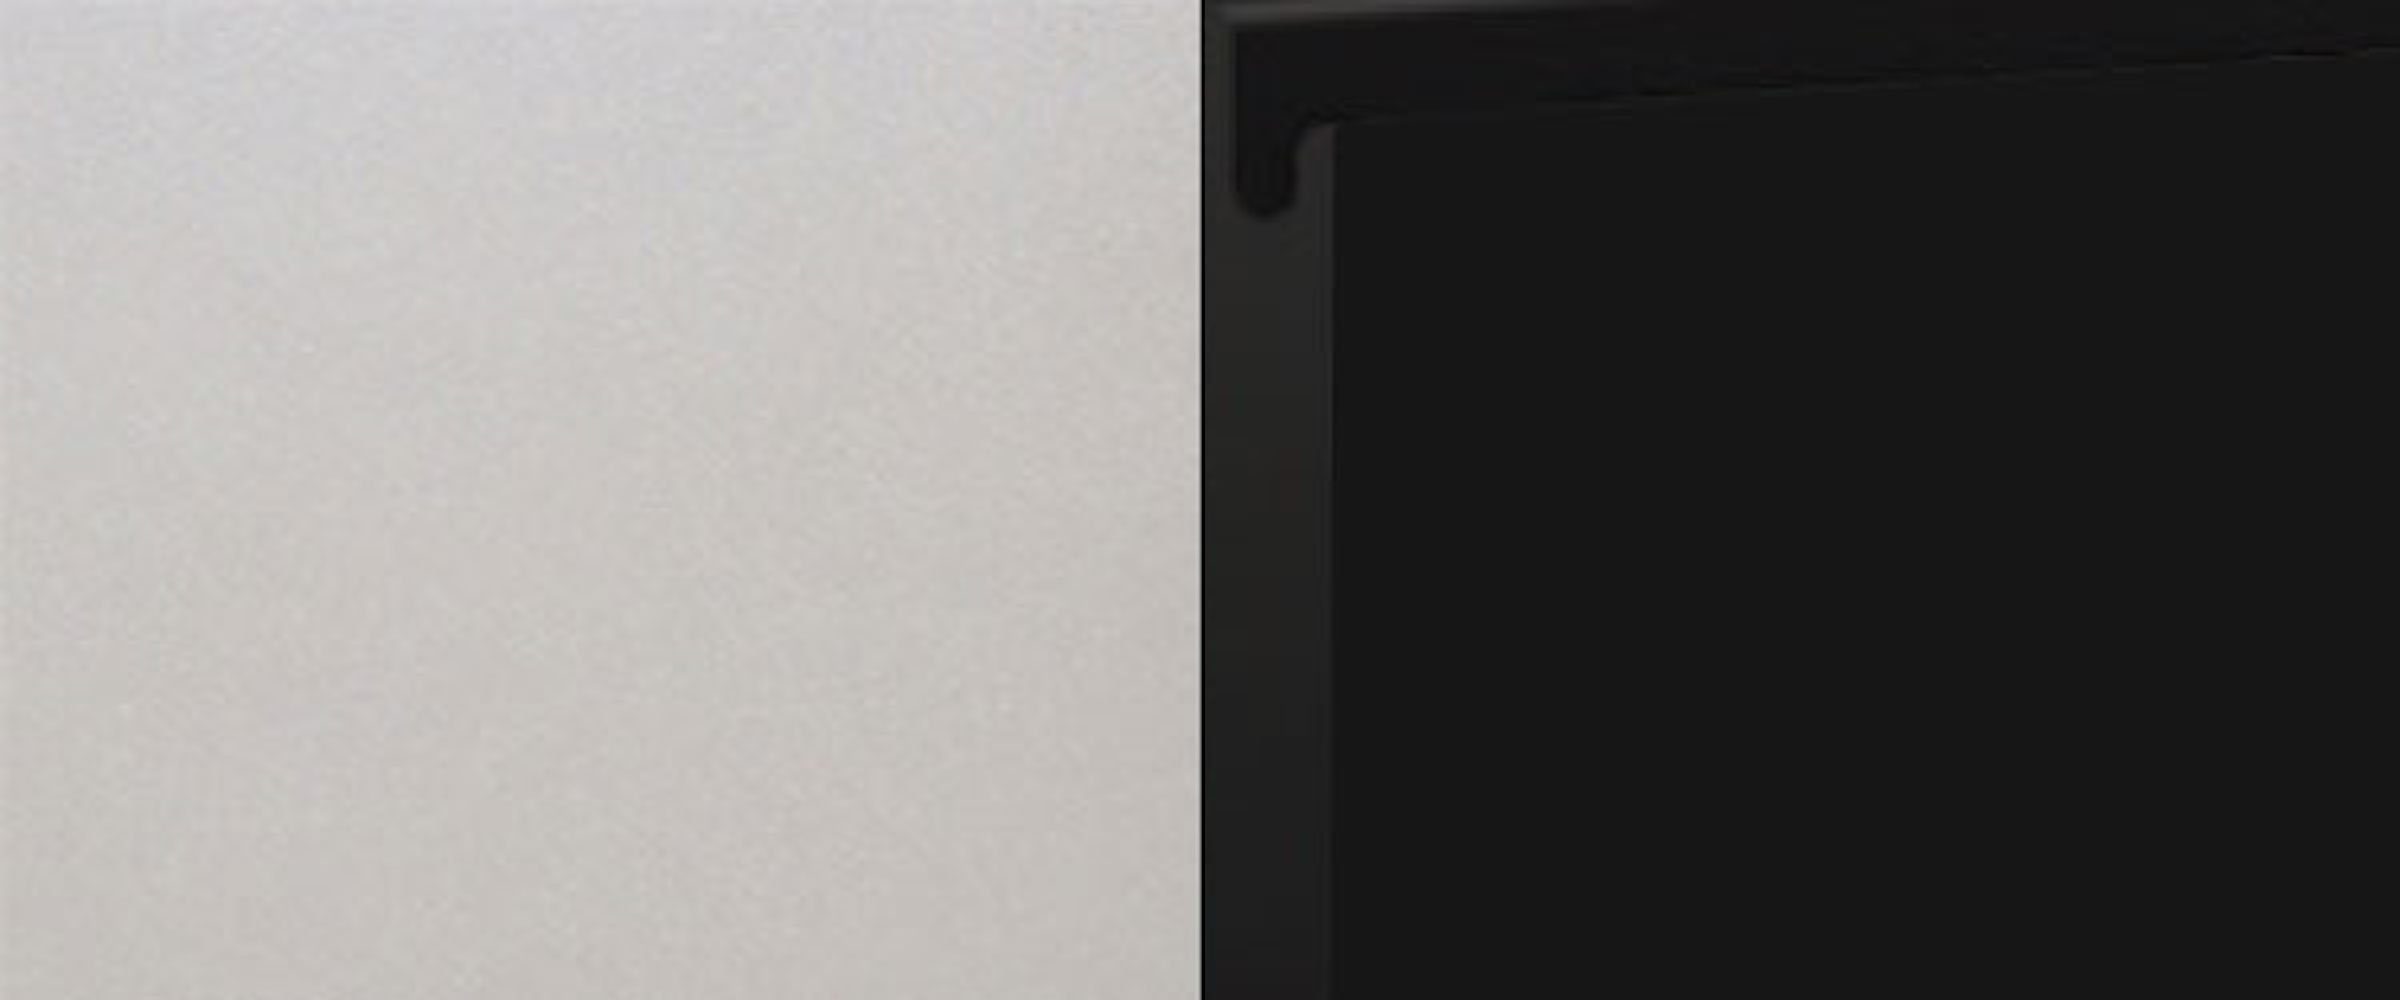 Feldmann-Wohnen Klapphängeschrank Velden (VE-W3/60) grau grau matt matt schwarz schwarz - super grifflos 60x32,5x72cm super 